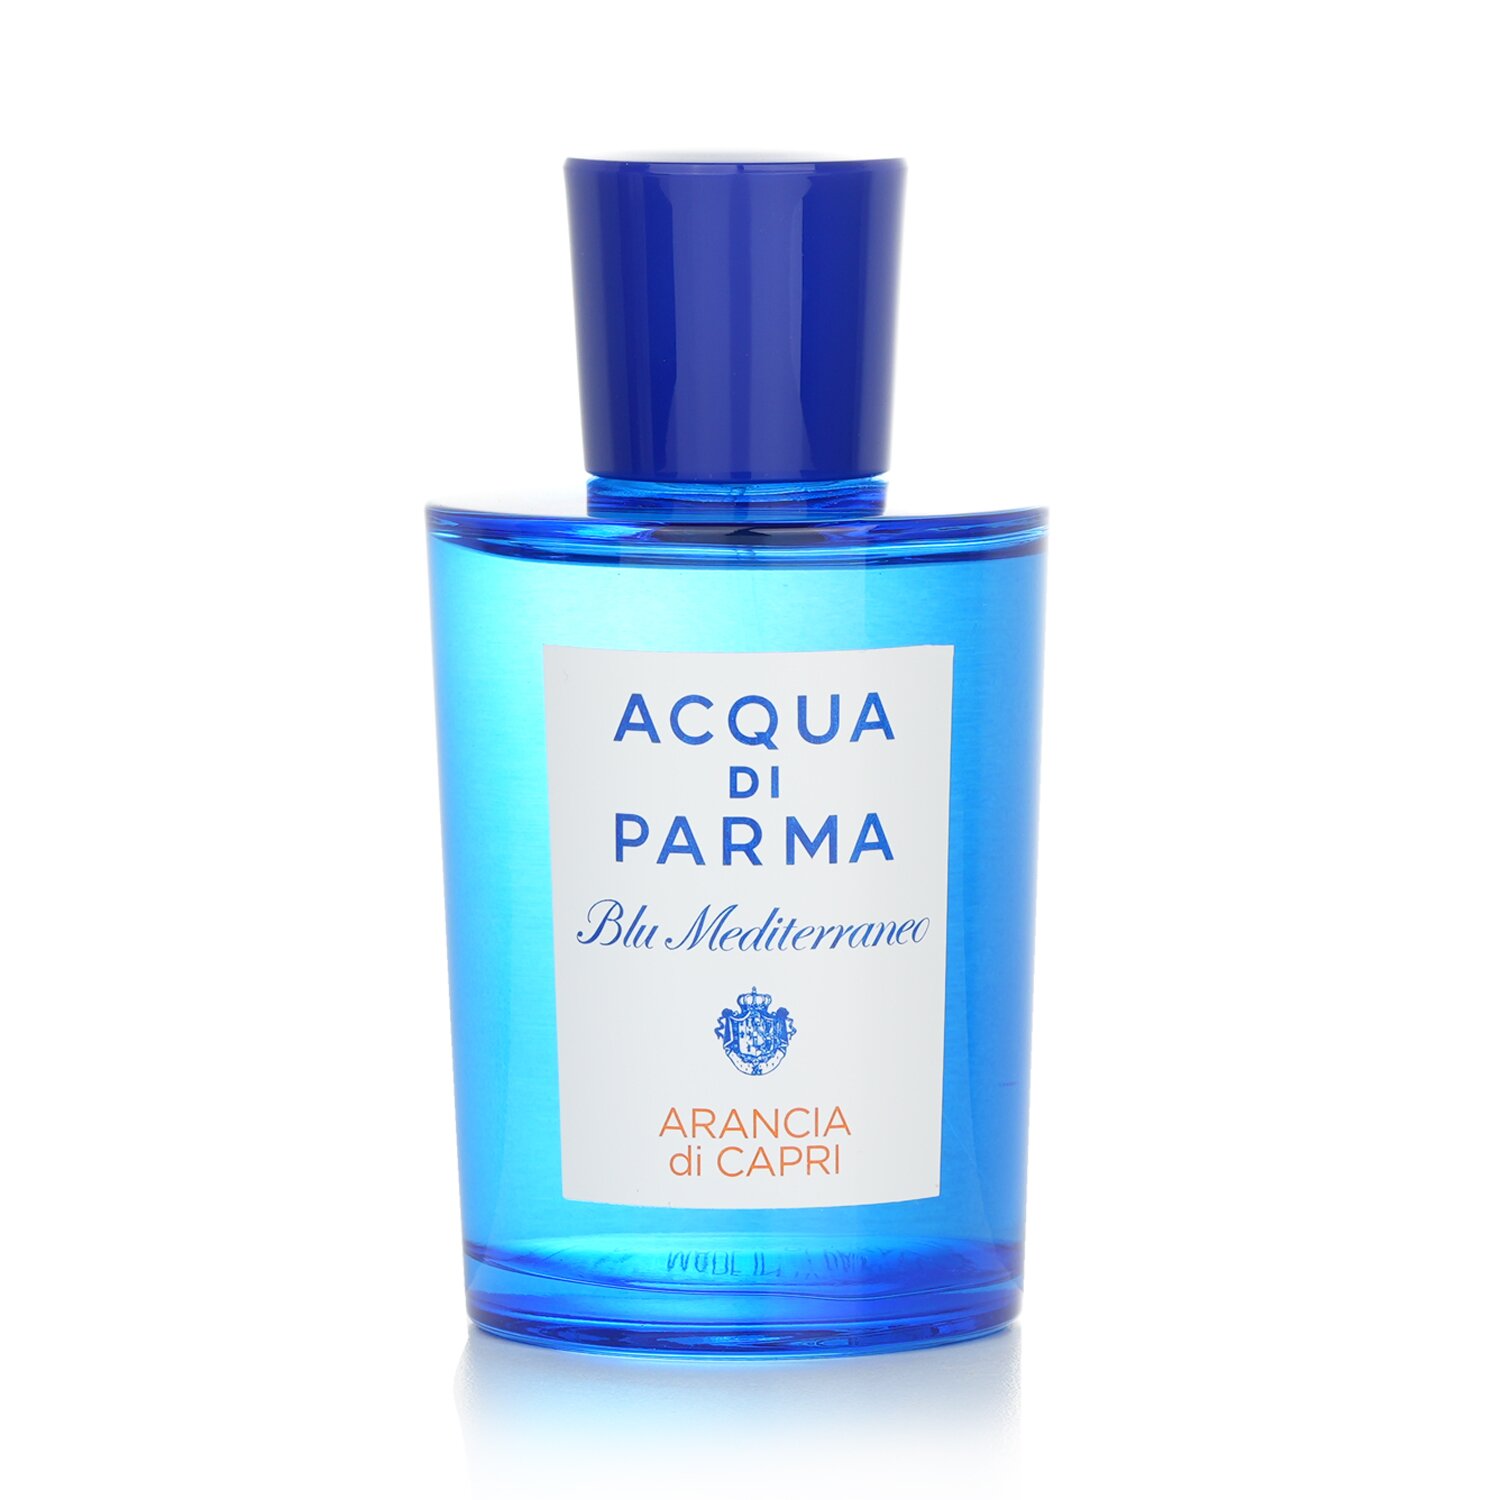 Acqua Di Parma 帕爾瑪之水 藍地中海卡普里香橙淡香水噴霧 150ml/5oz